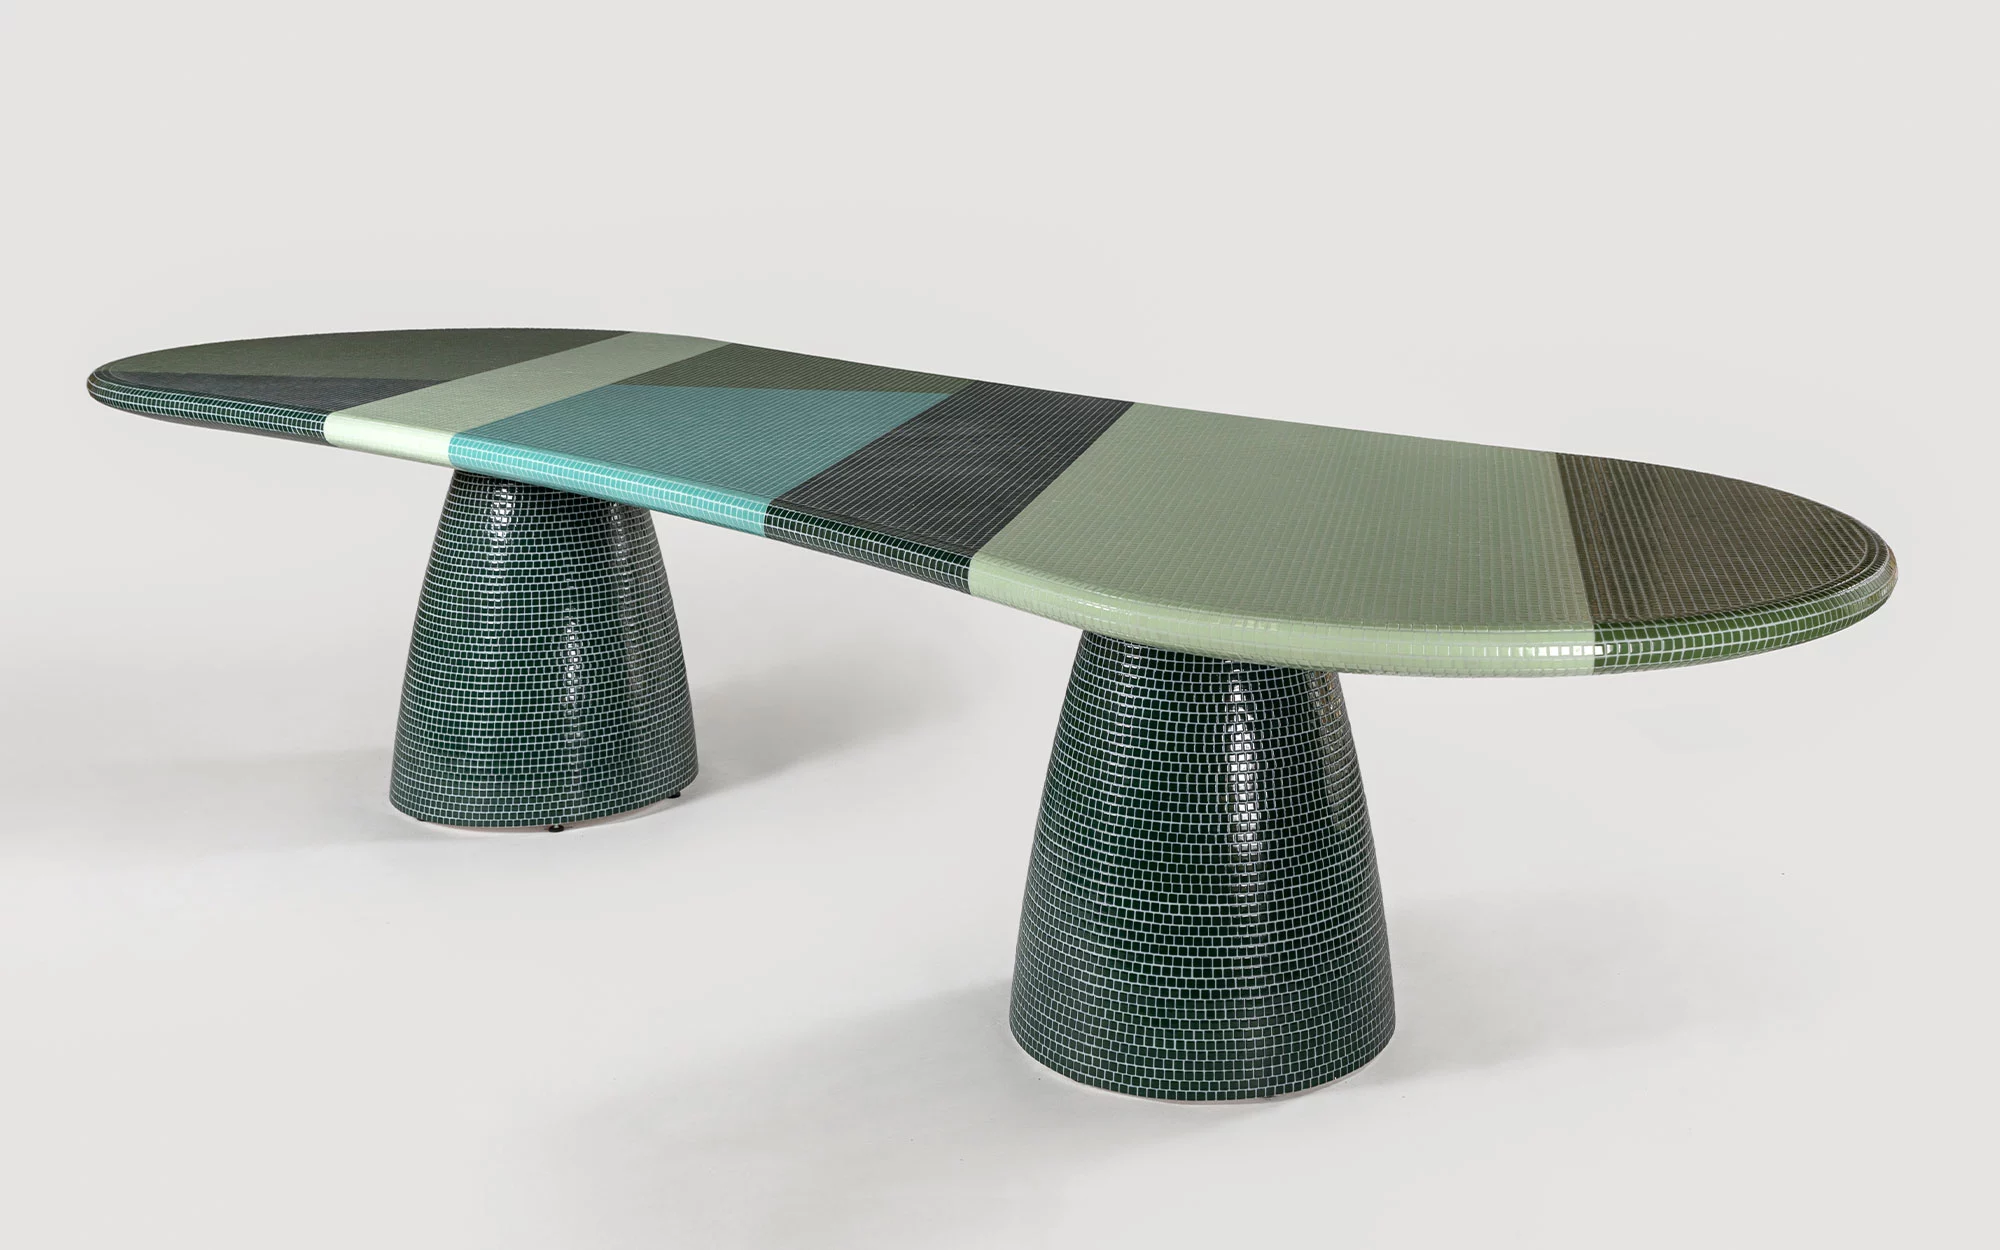 Umbria Dining Table - Alessandro Mendini - Stool - Galerie kreo